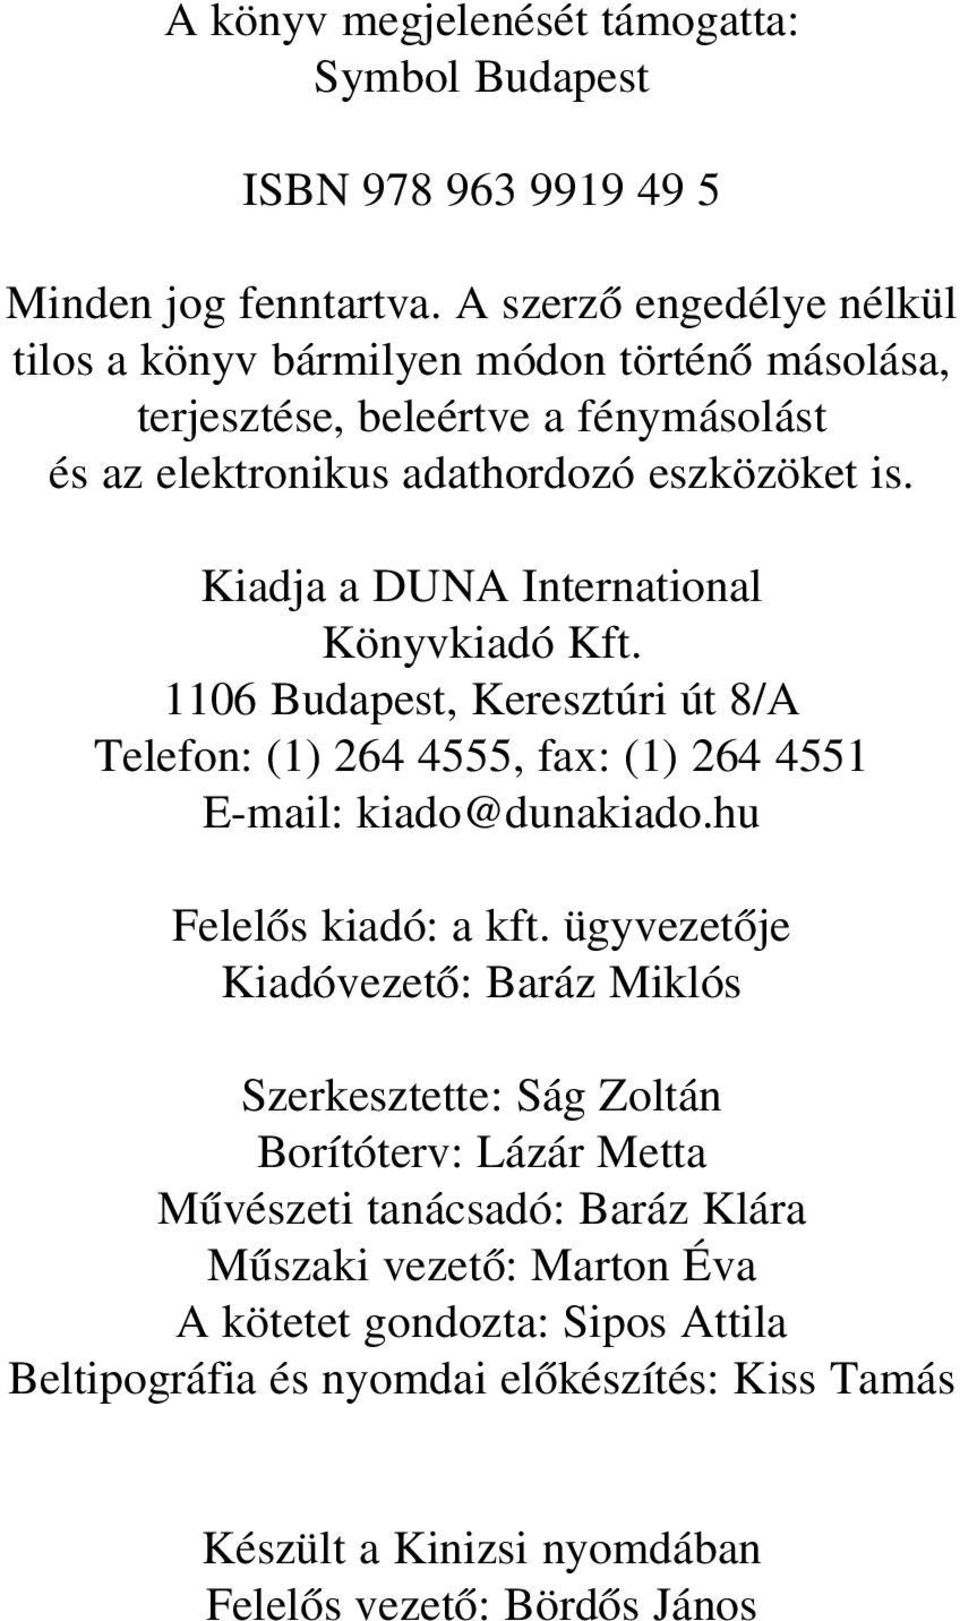 Kiadja a DUNA International Könyvkiadó Kft. 1106 Budapest, Keresztúri út 8/A Telefon: (1) 264 4555, fax: (1) 264 4551 E-mail: kiado@dunakiado.hu Felelõs kiadó: a kft.